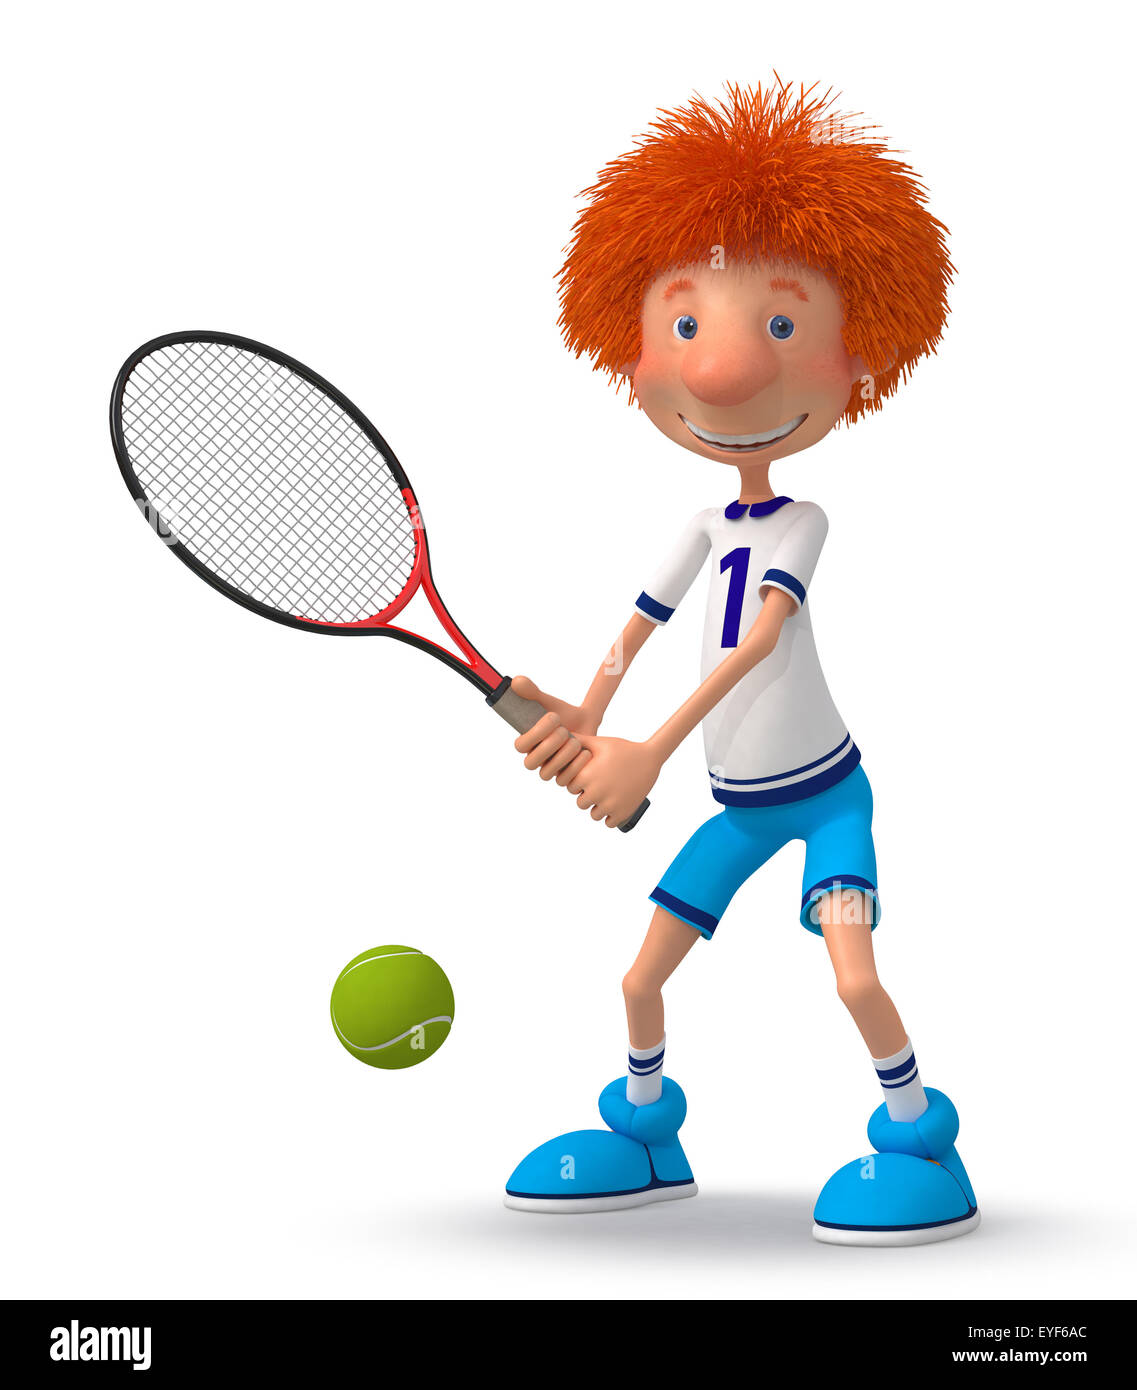 Cartoon tennis court hi-res stock photography and images - Alamy